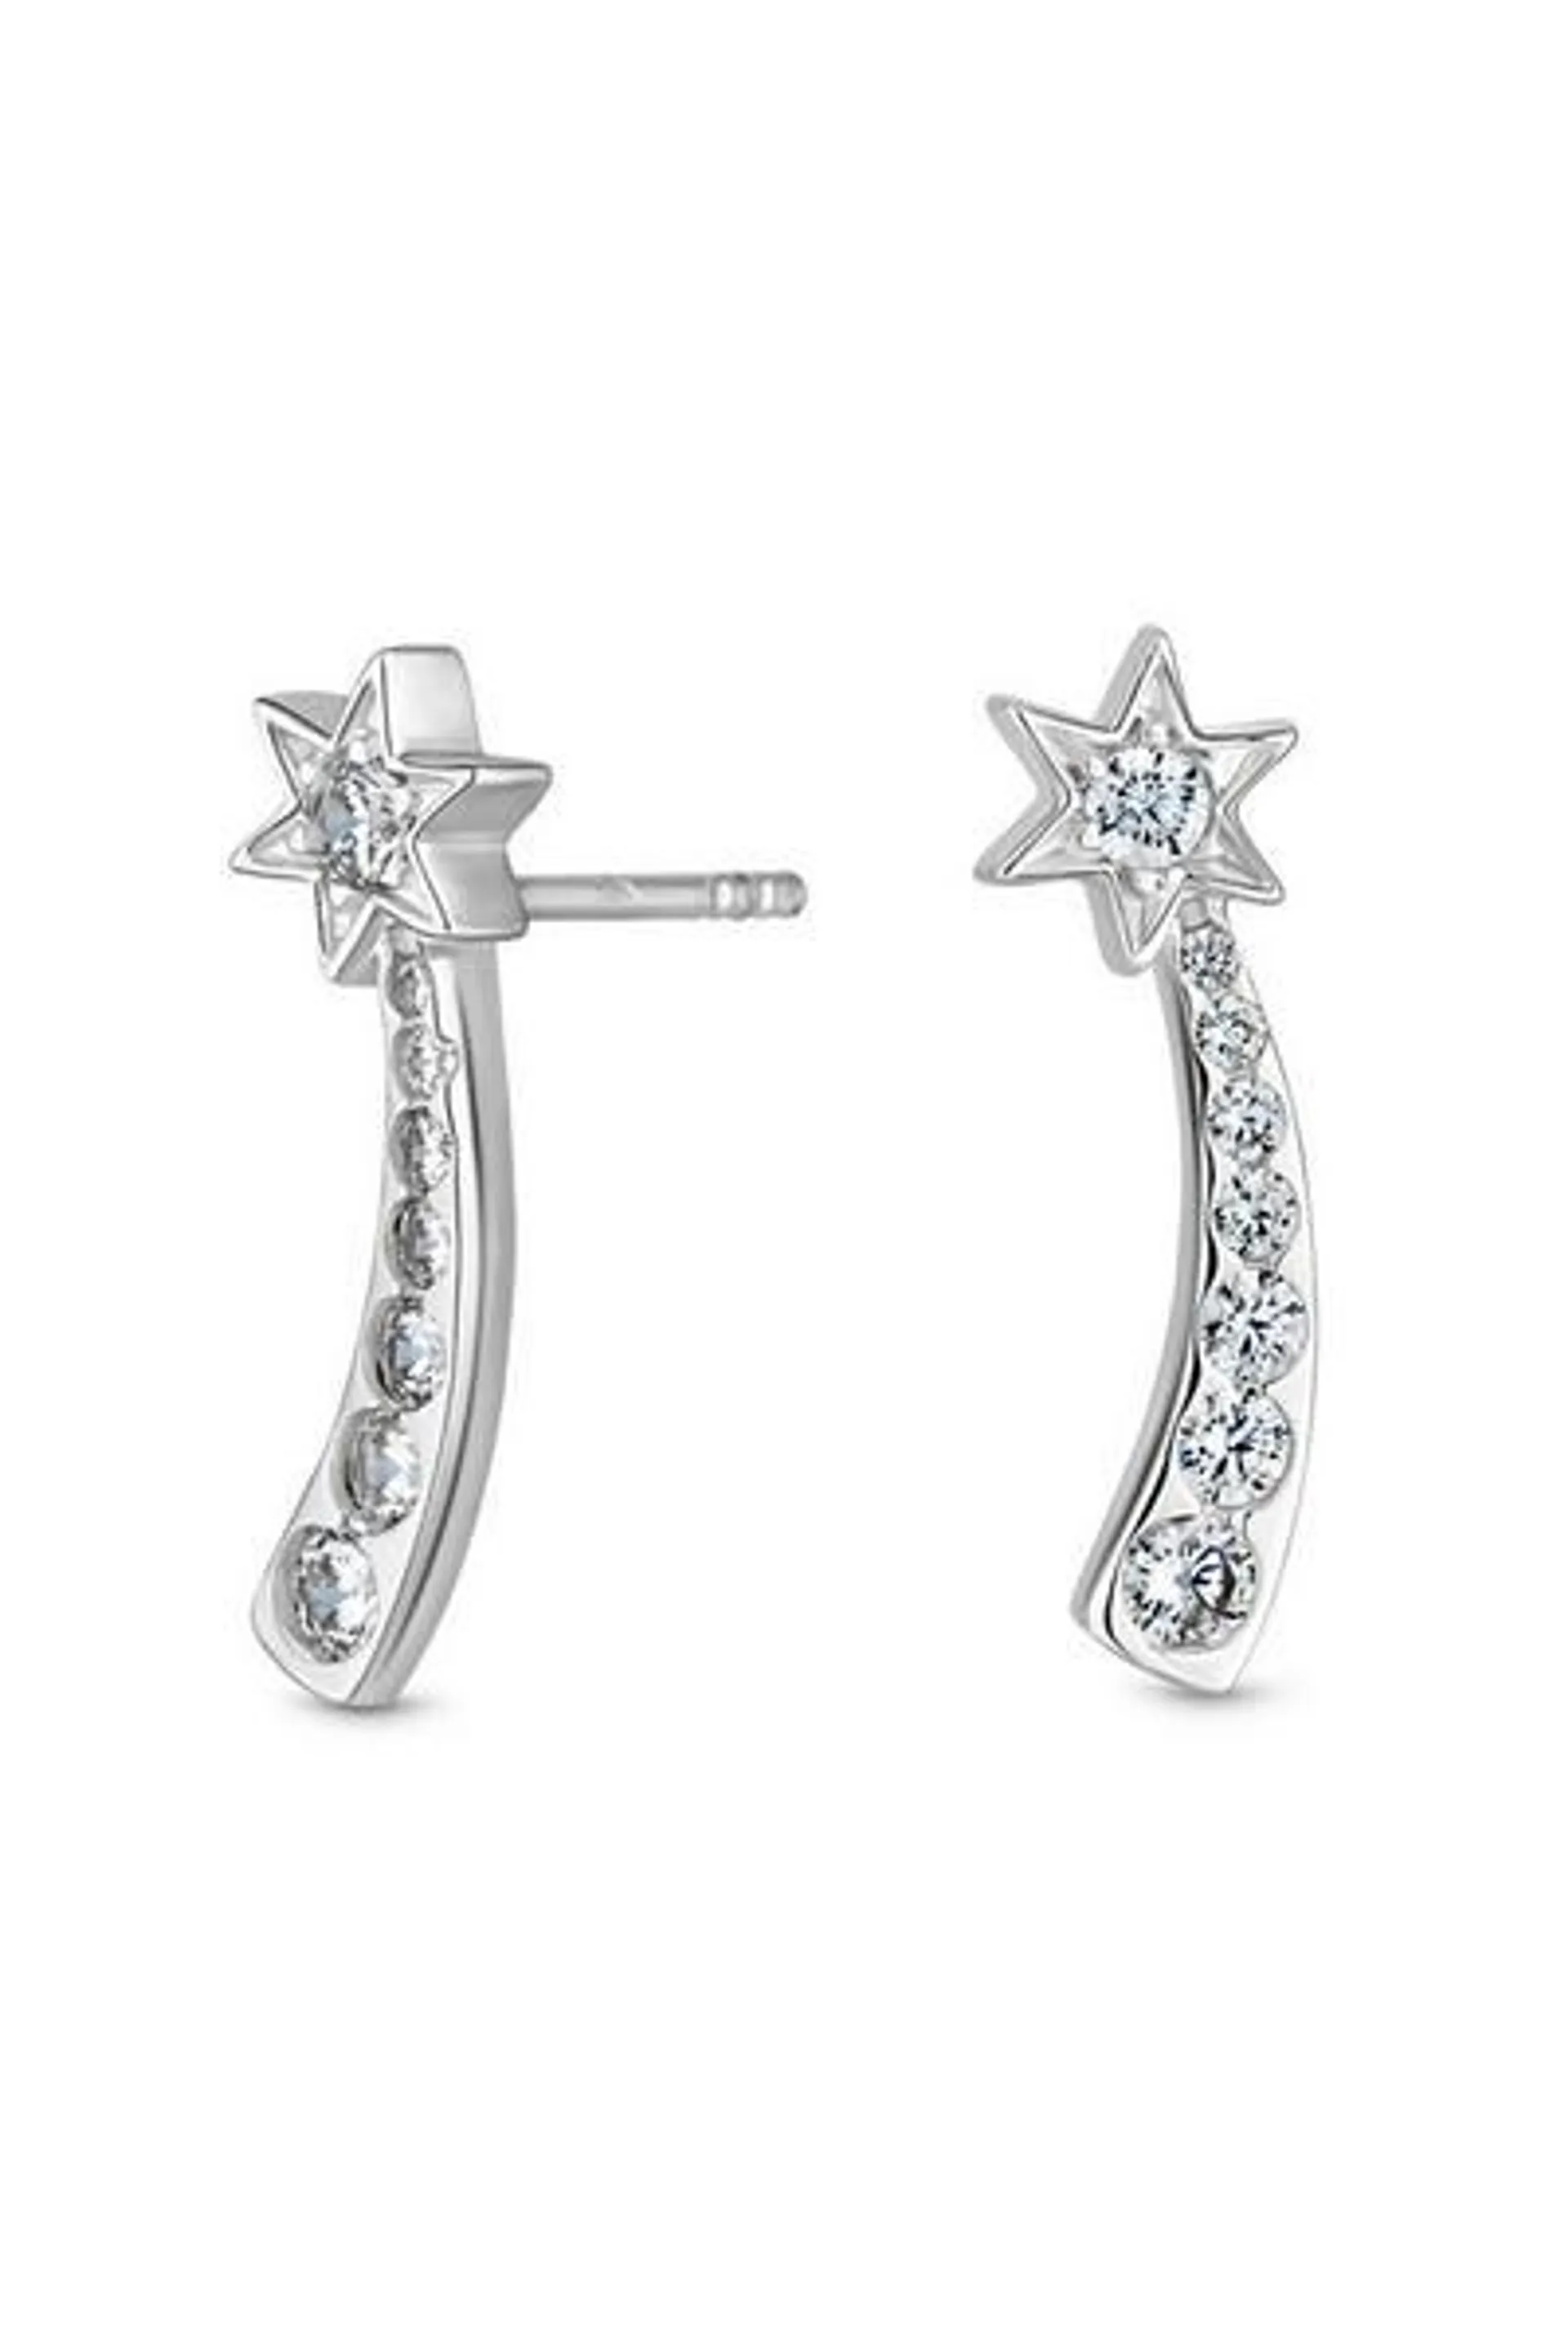 Simply Silver Sterling Silver 925 Shooting Star Earrings